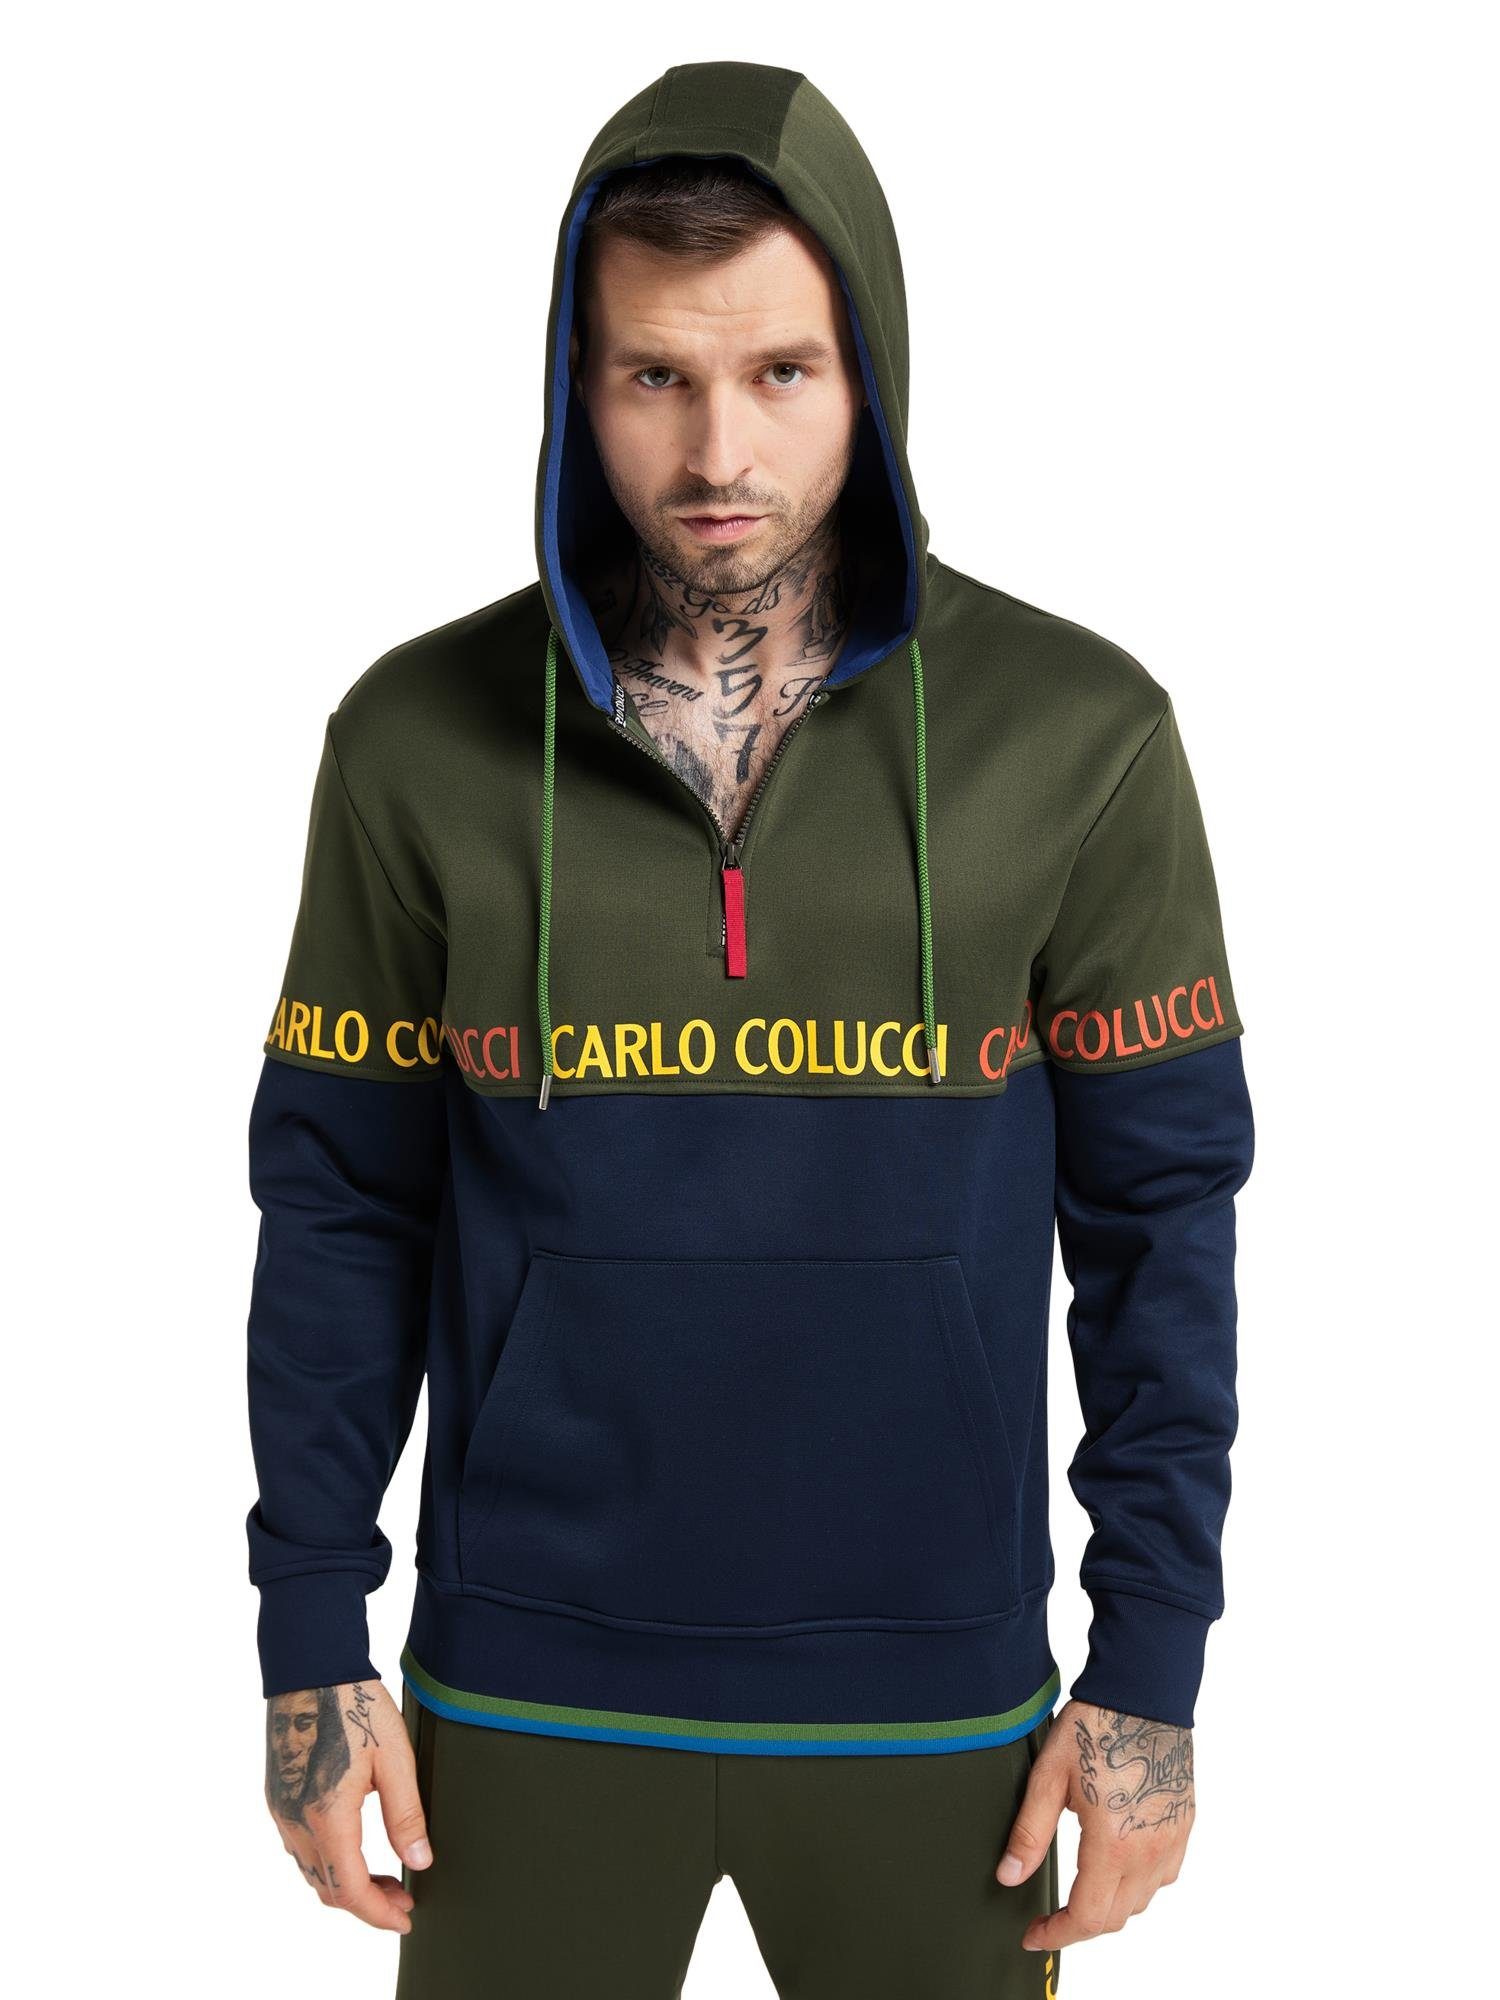 COLUCCI Sweater Grün CARLO Carrari